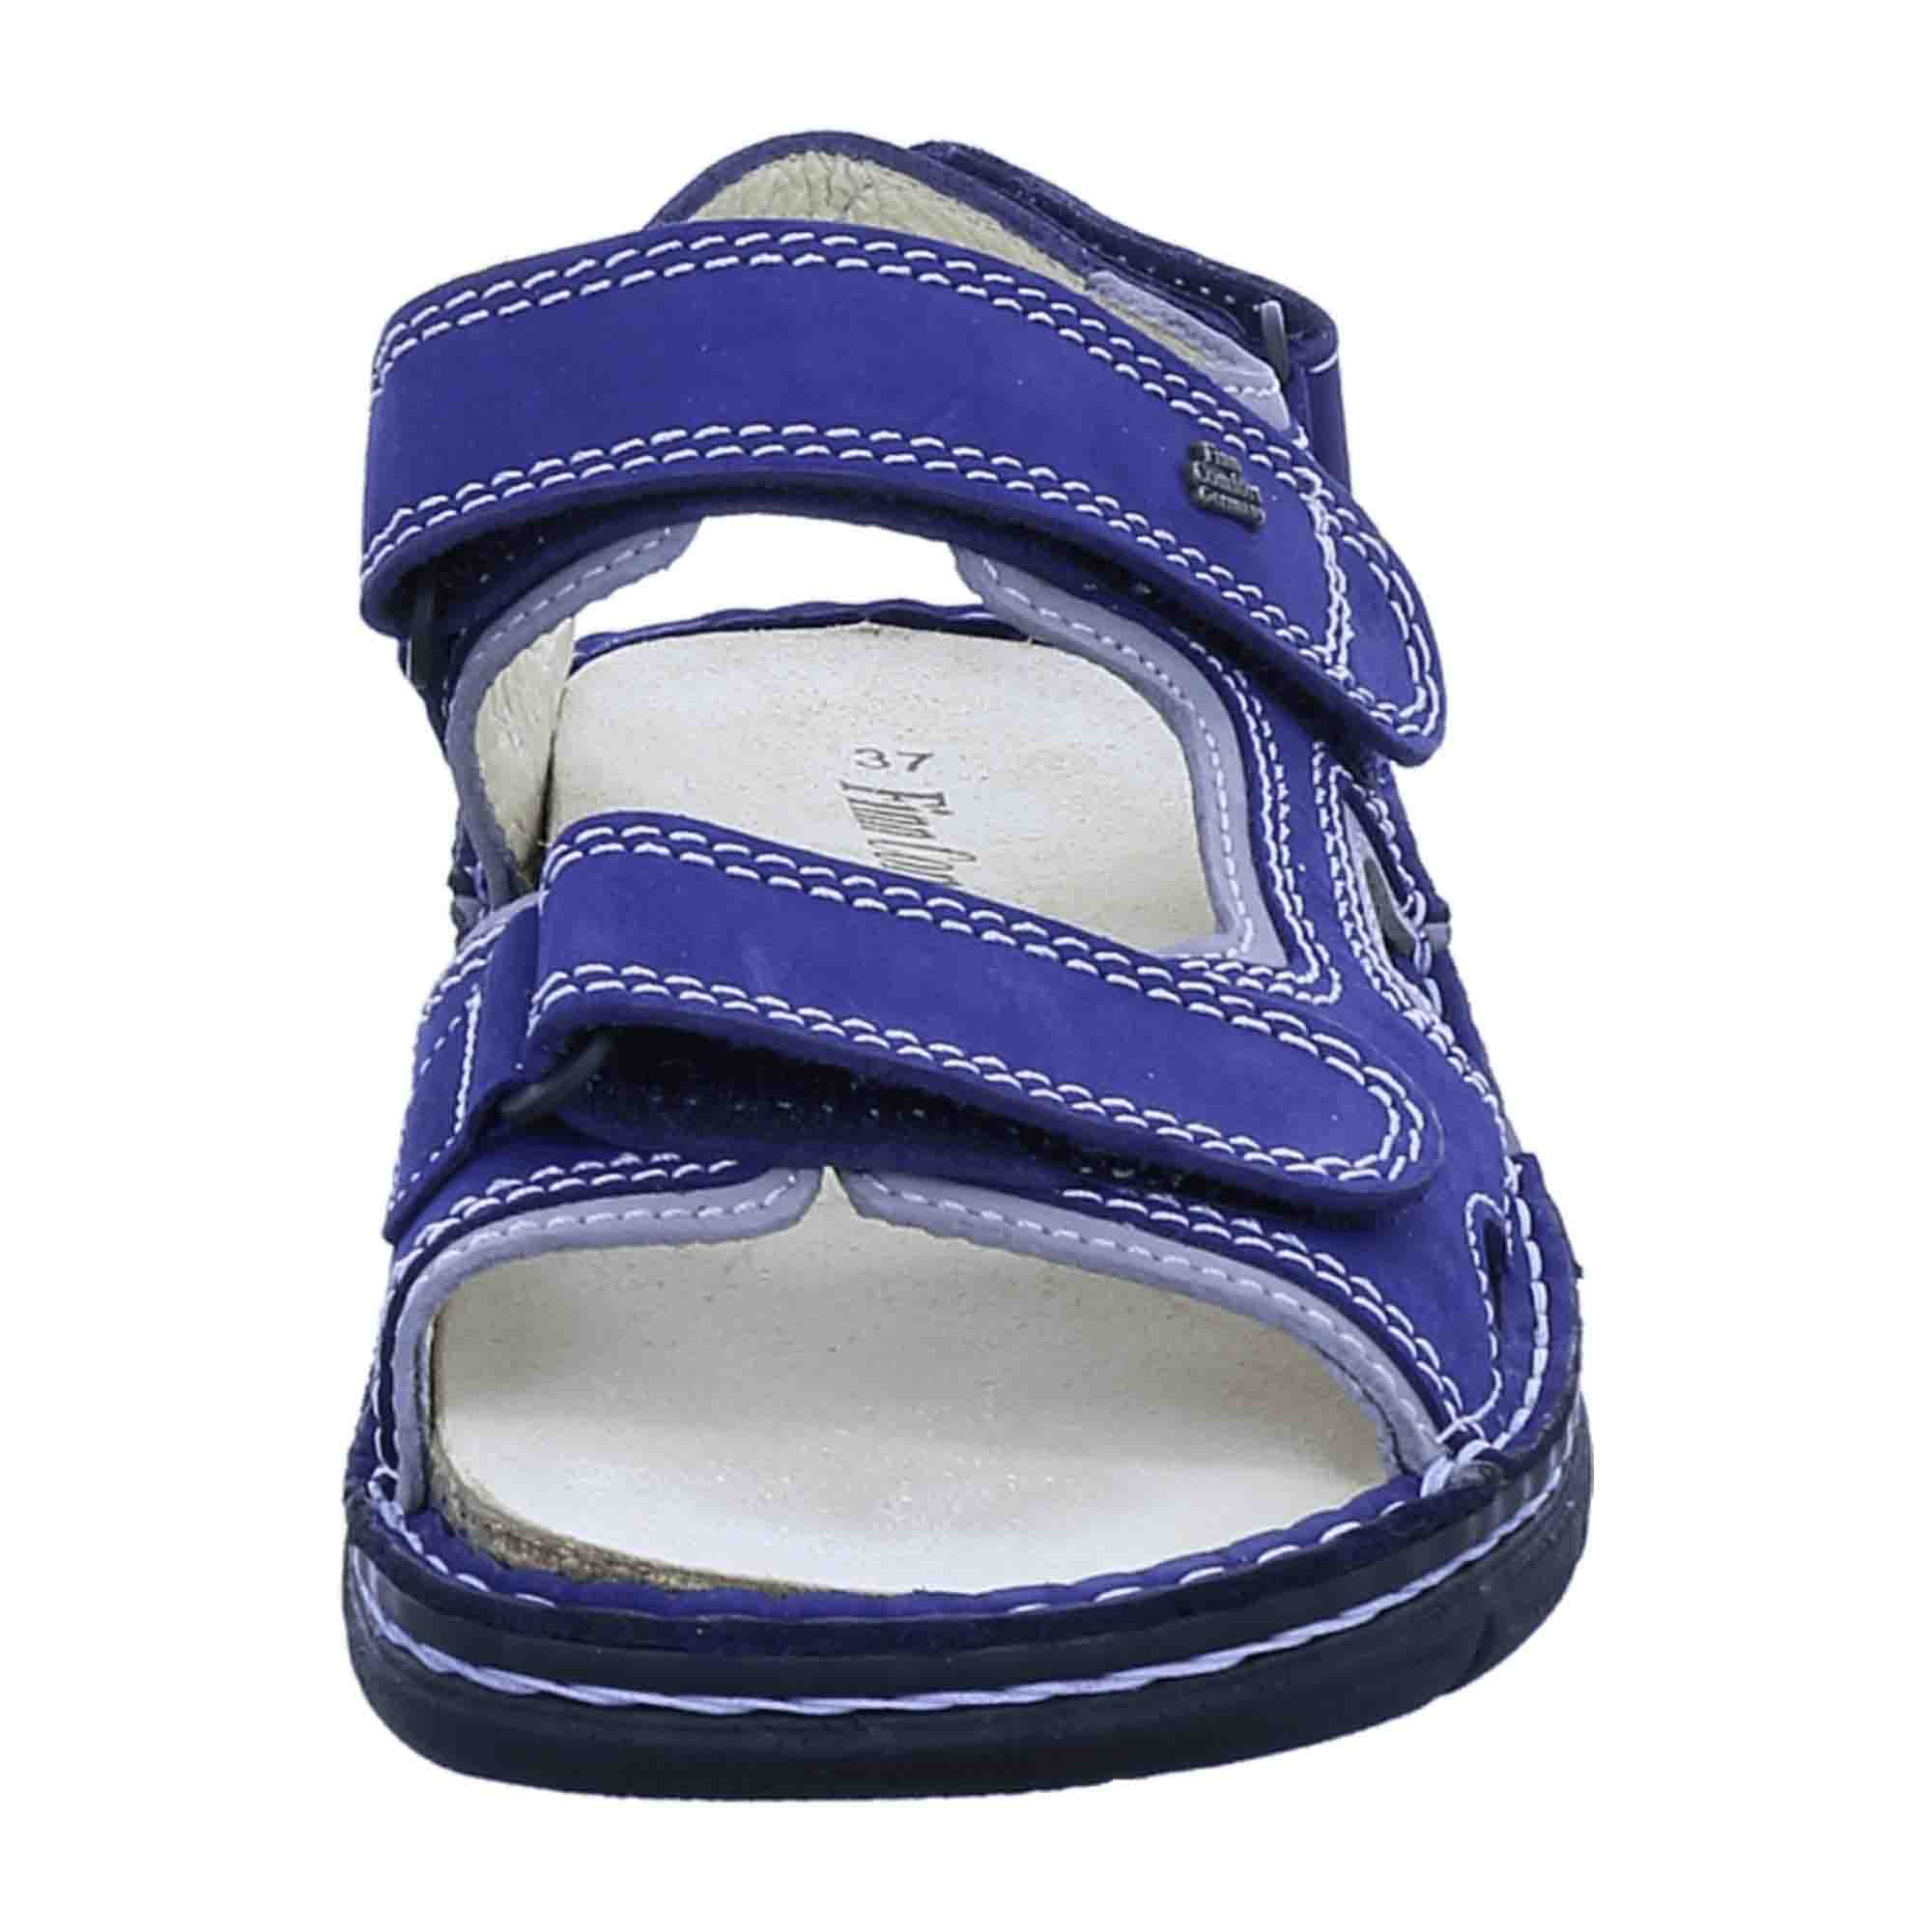 Finn Comfort Wanaka Men's Comfortable Walking Shoes - Durable, Stylish Blue Shoes 81540-9025